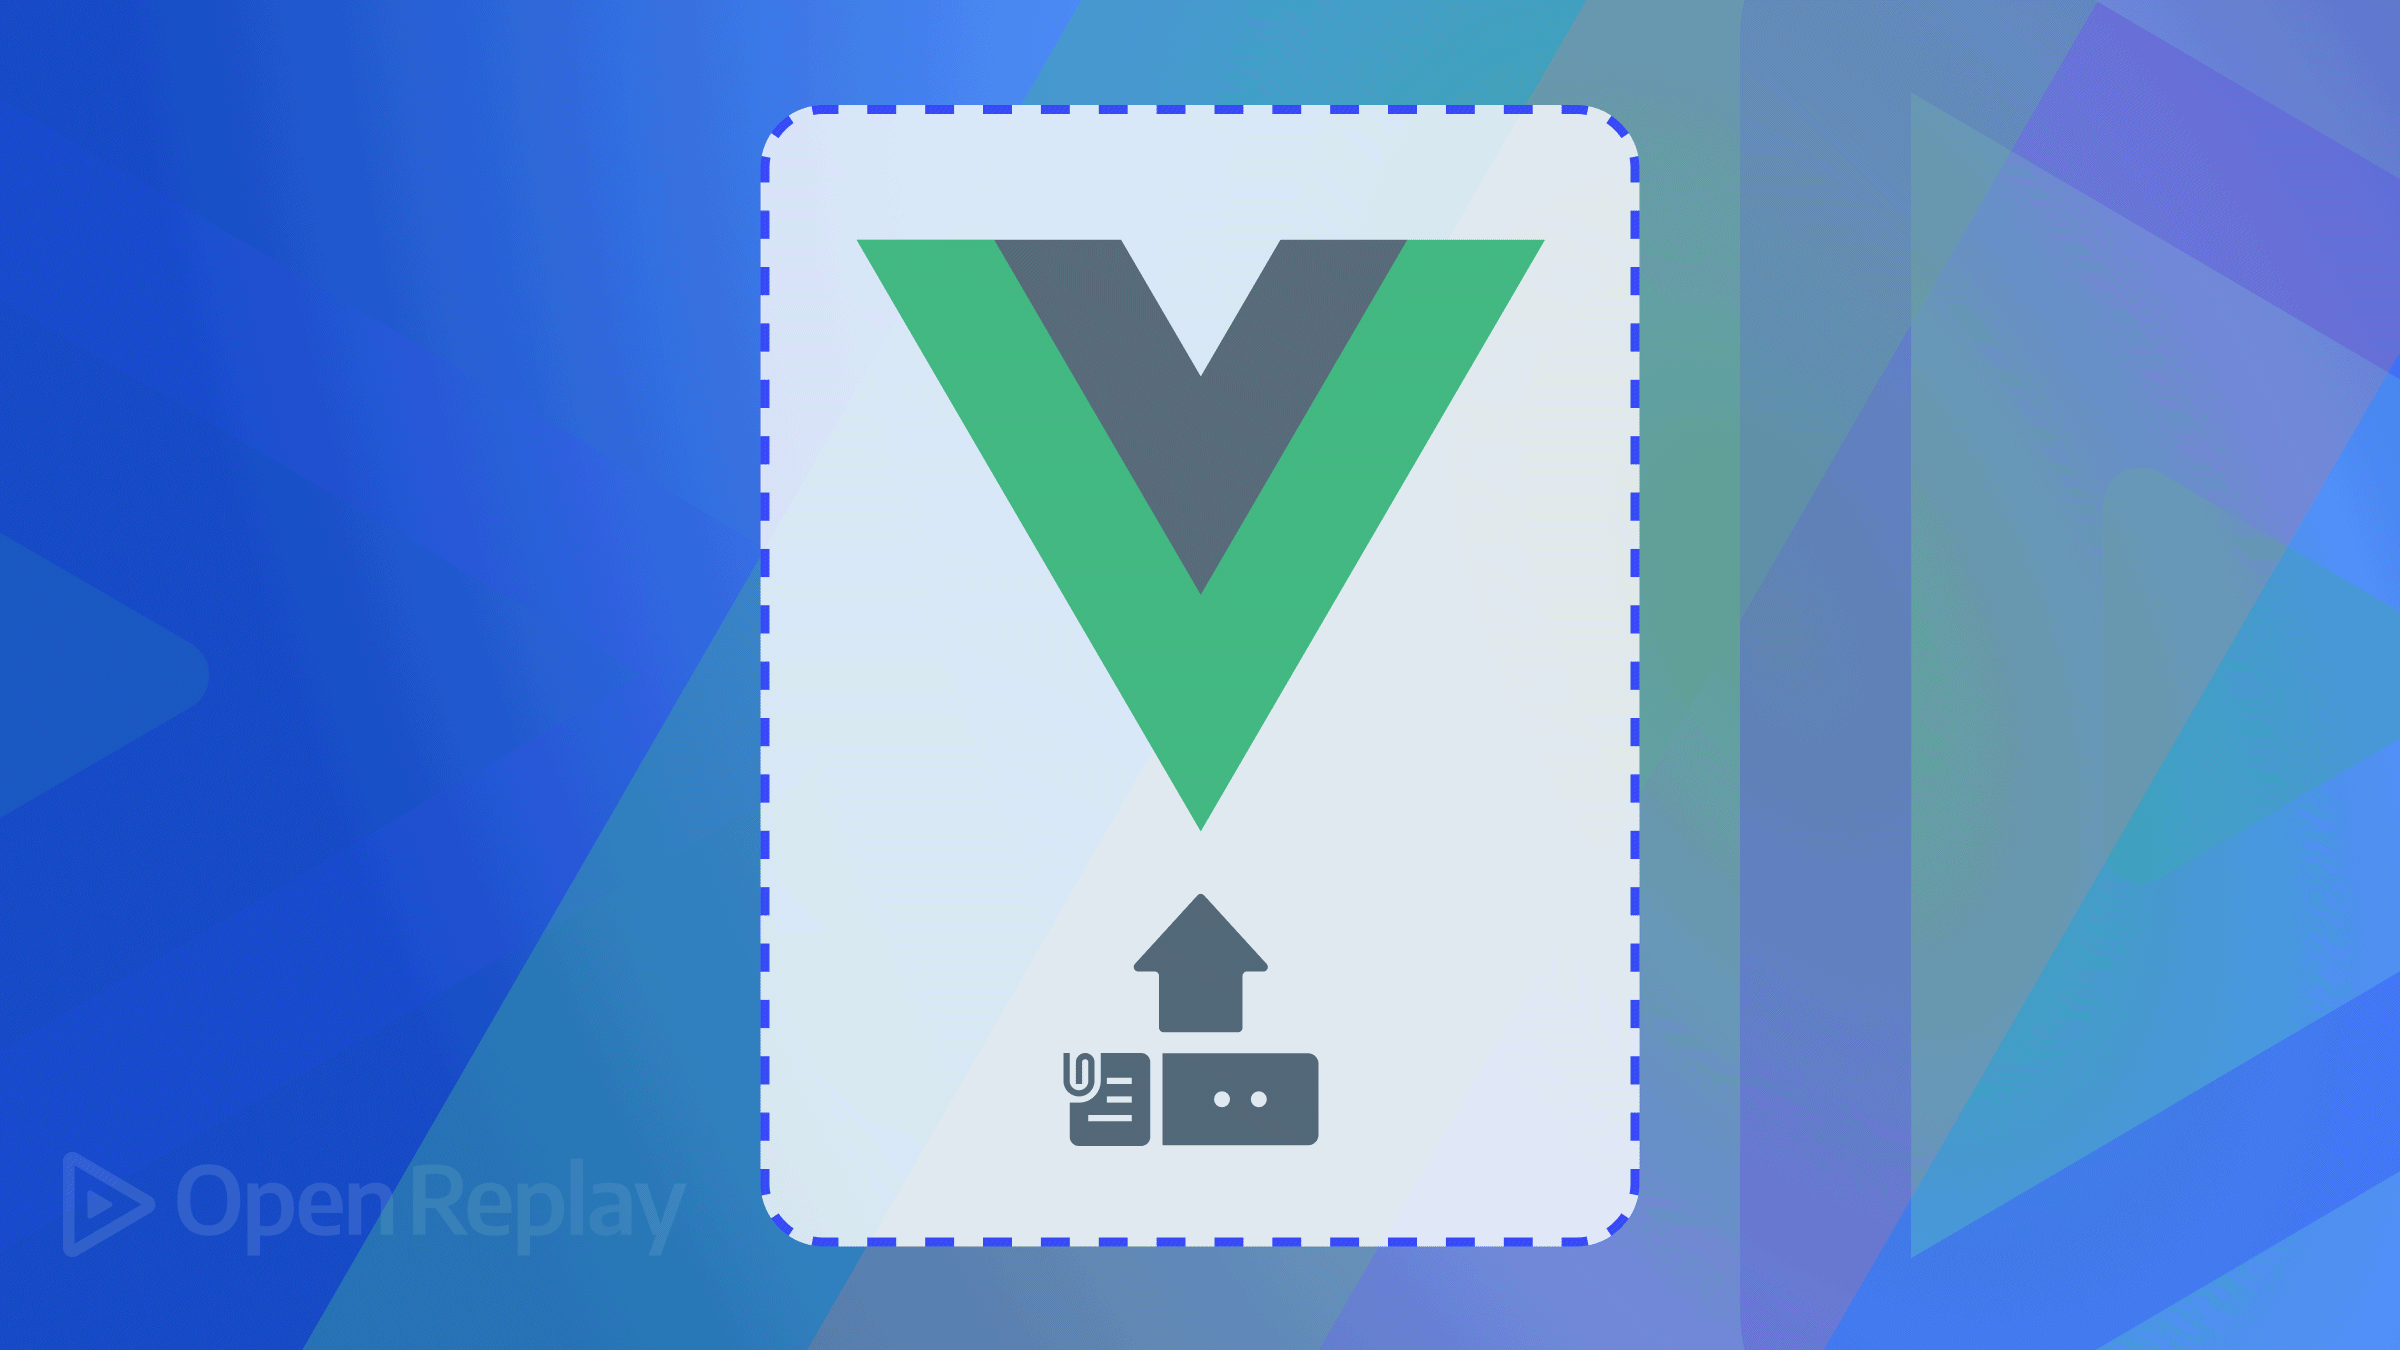 Building a custom file upload component for Vue